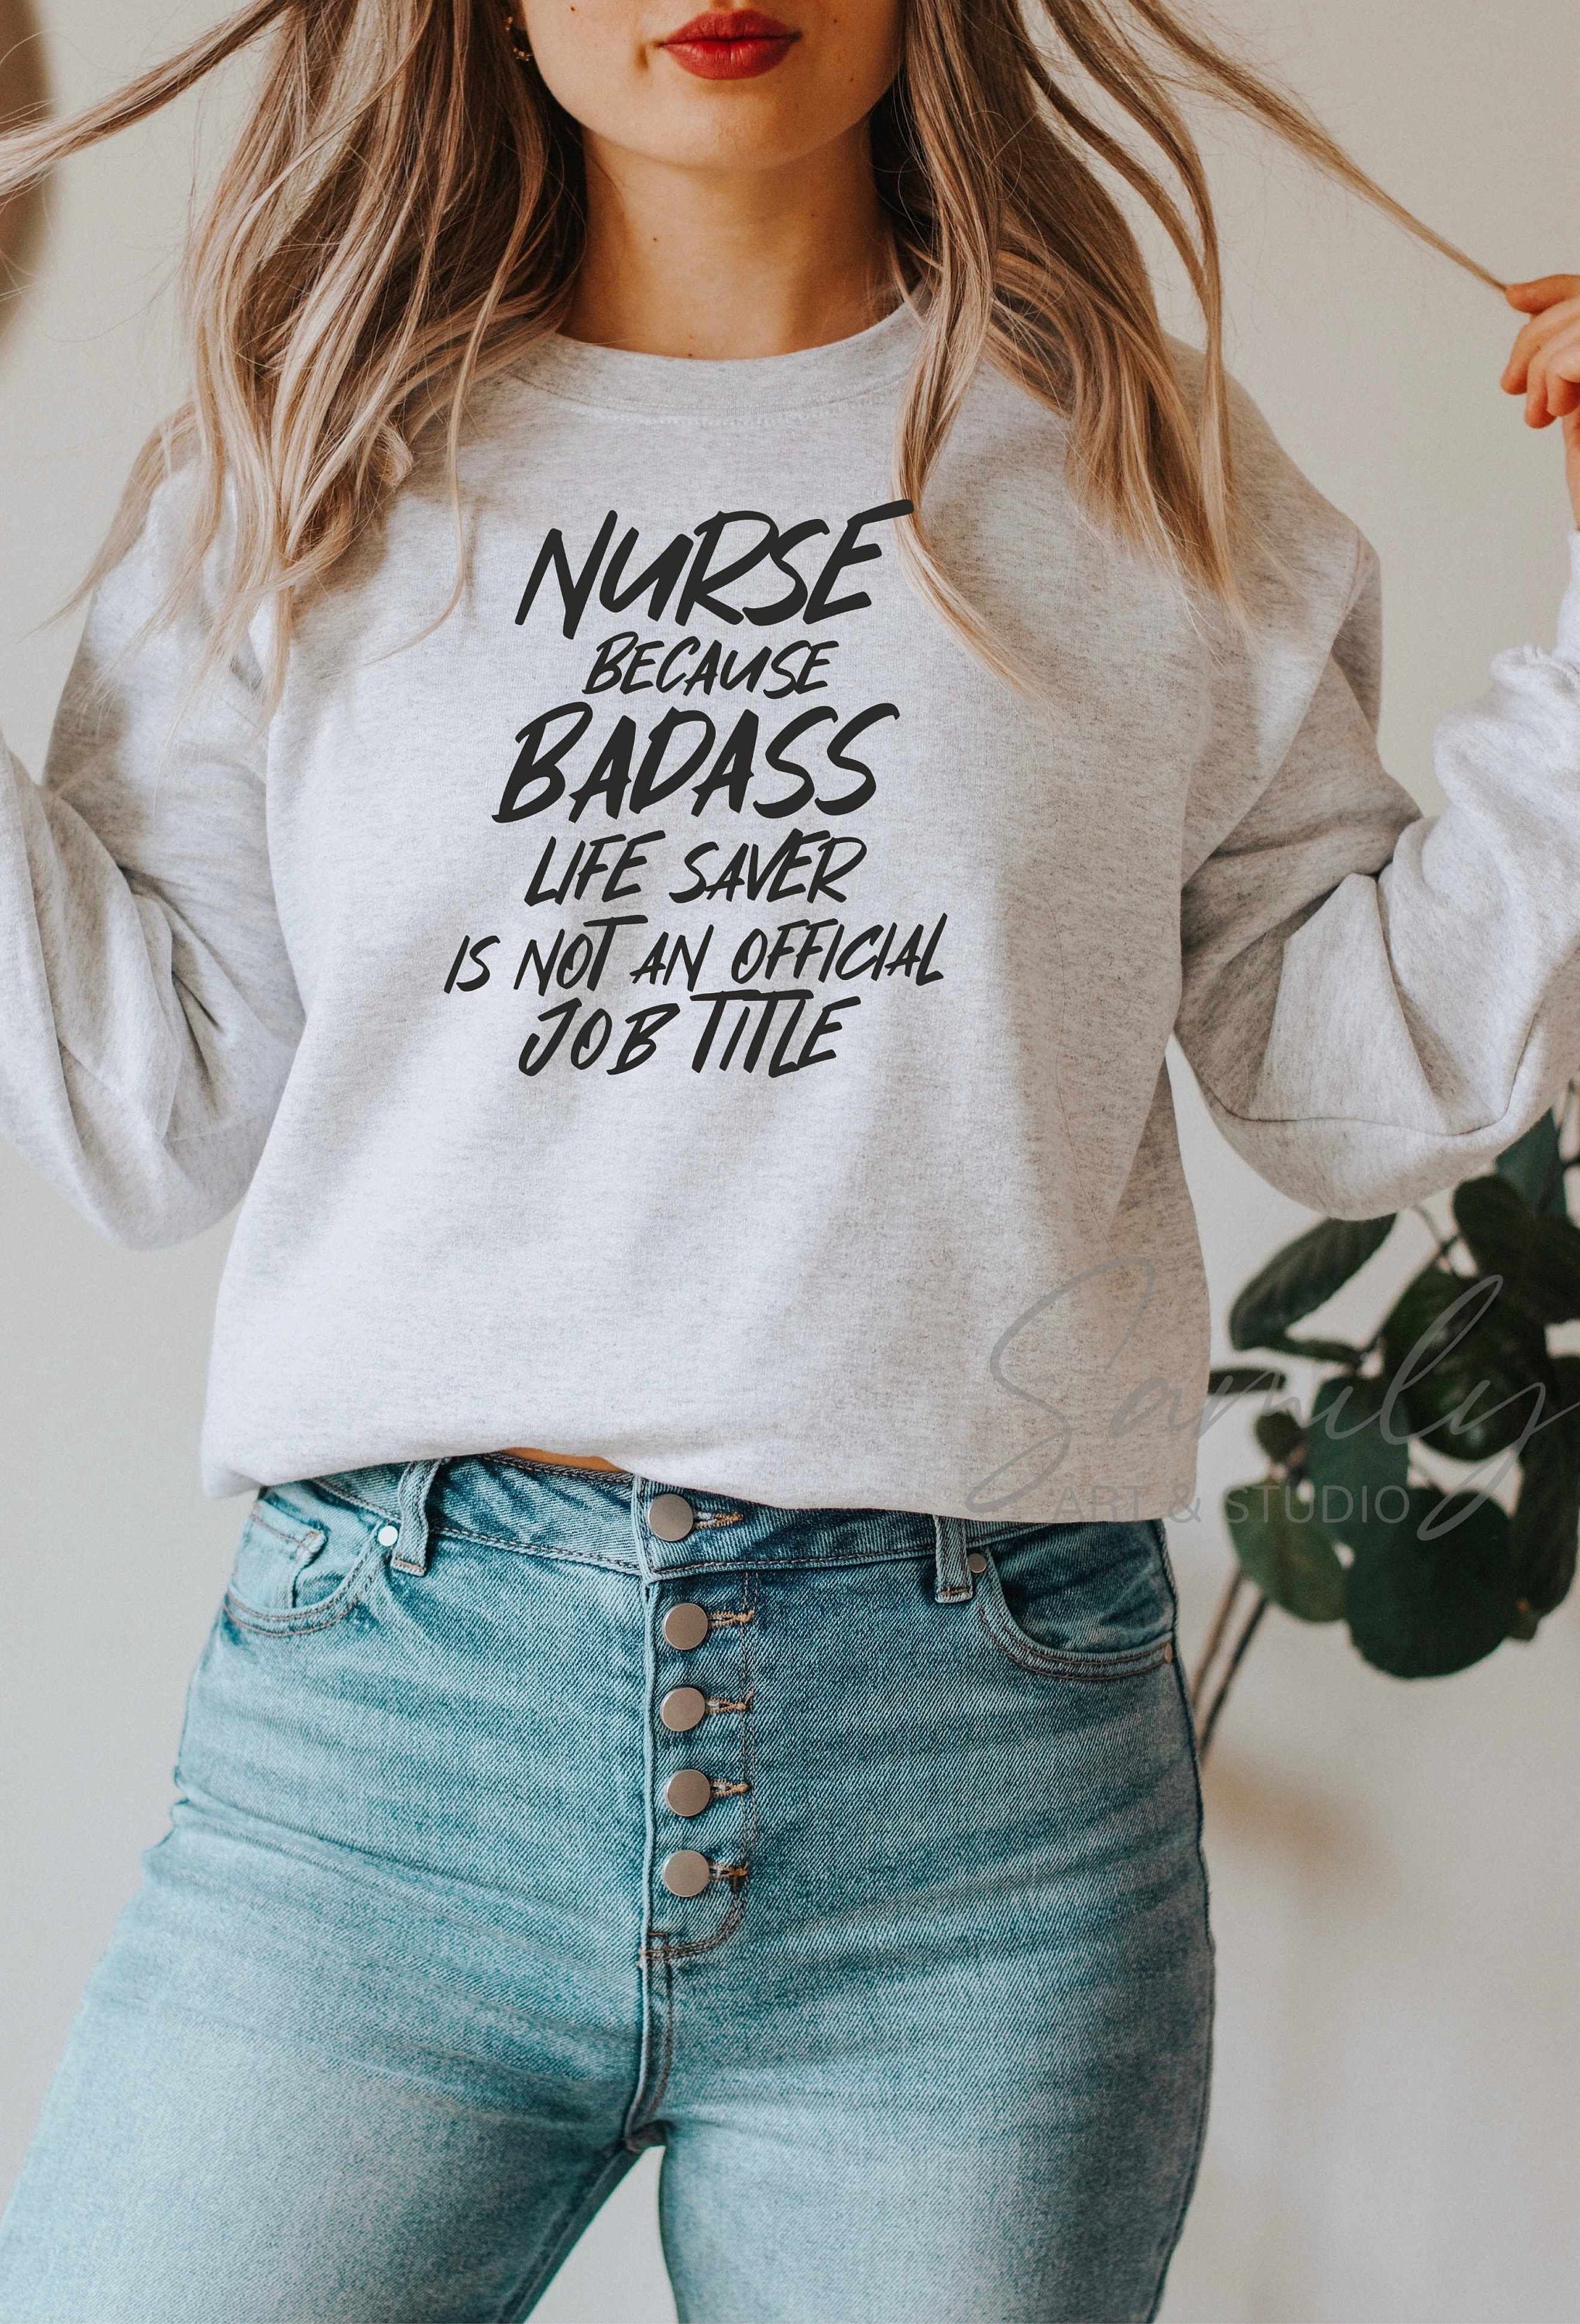 Nurse Because Badass Life Saver is Not an Official Job Title - Etsy